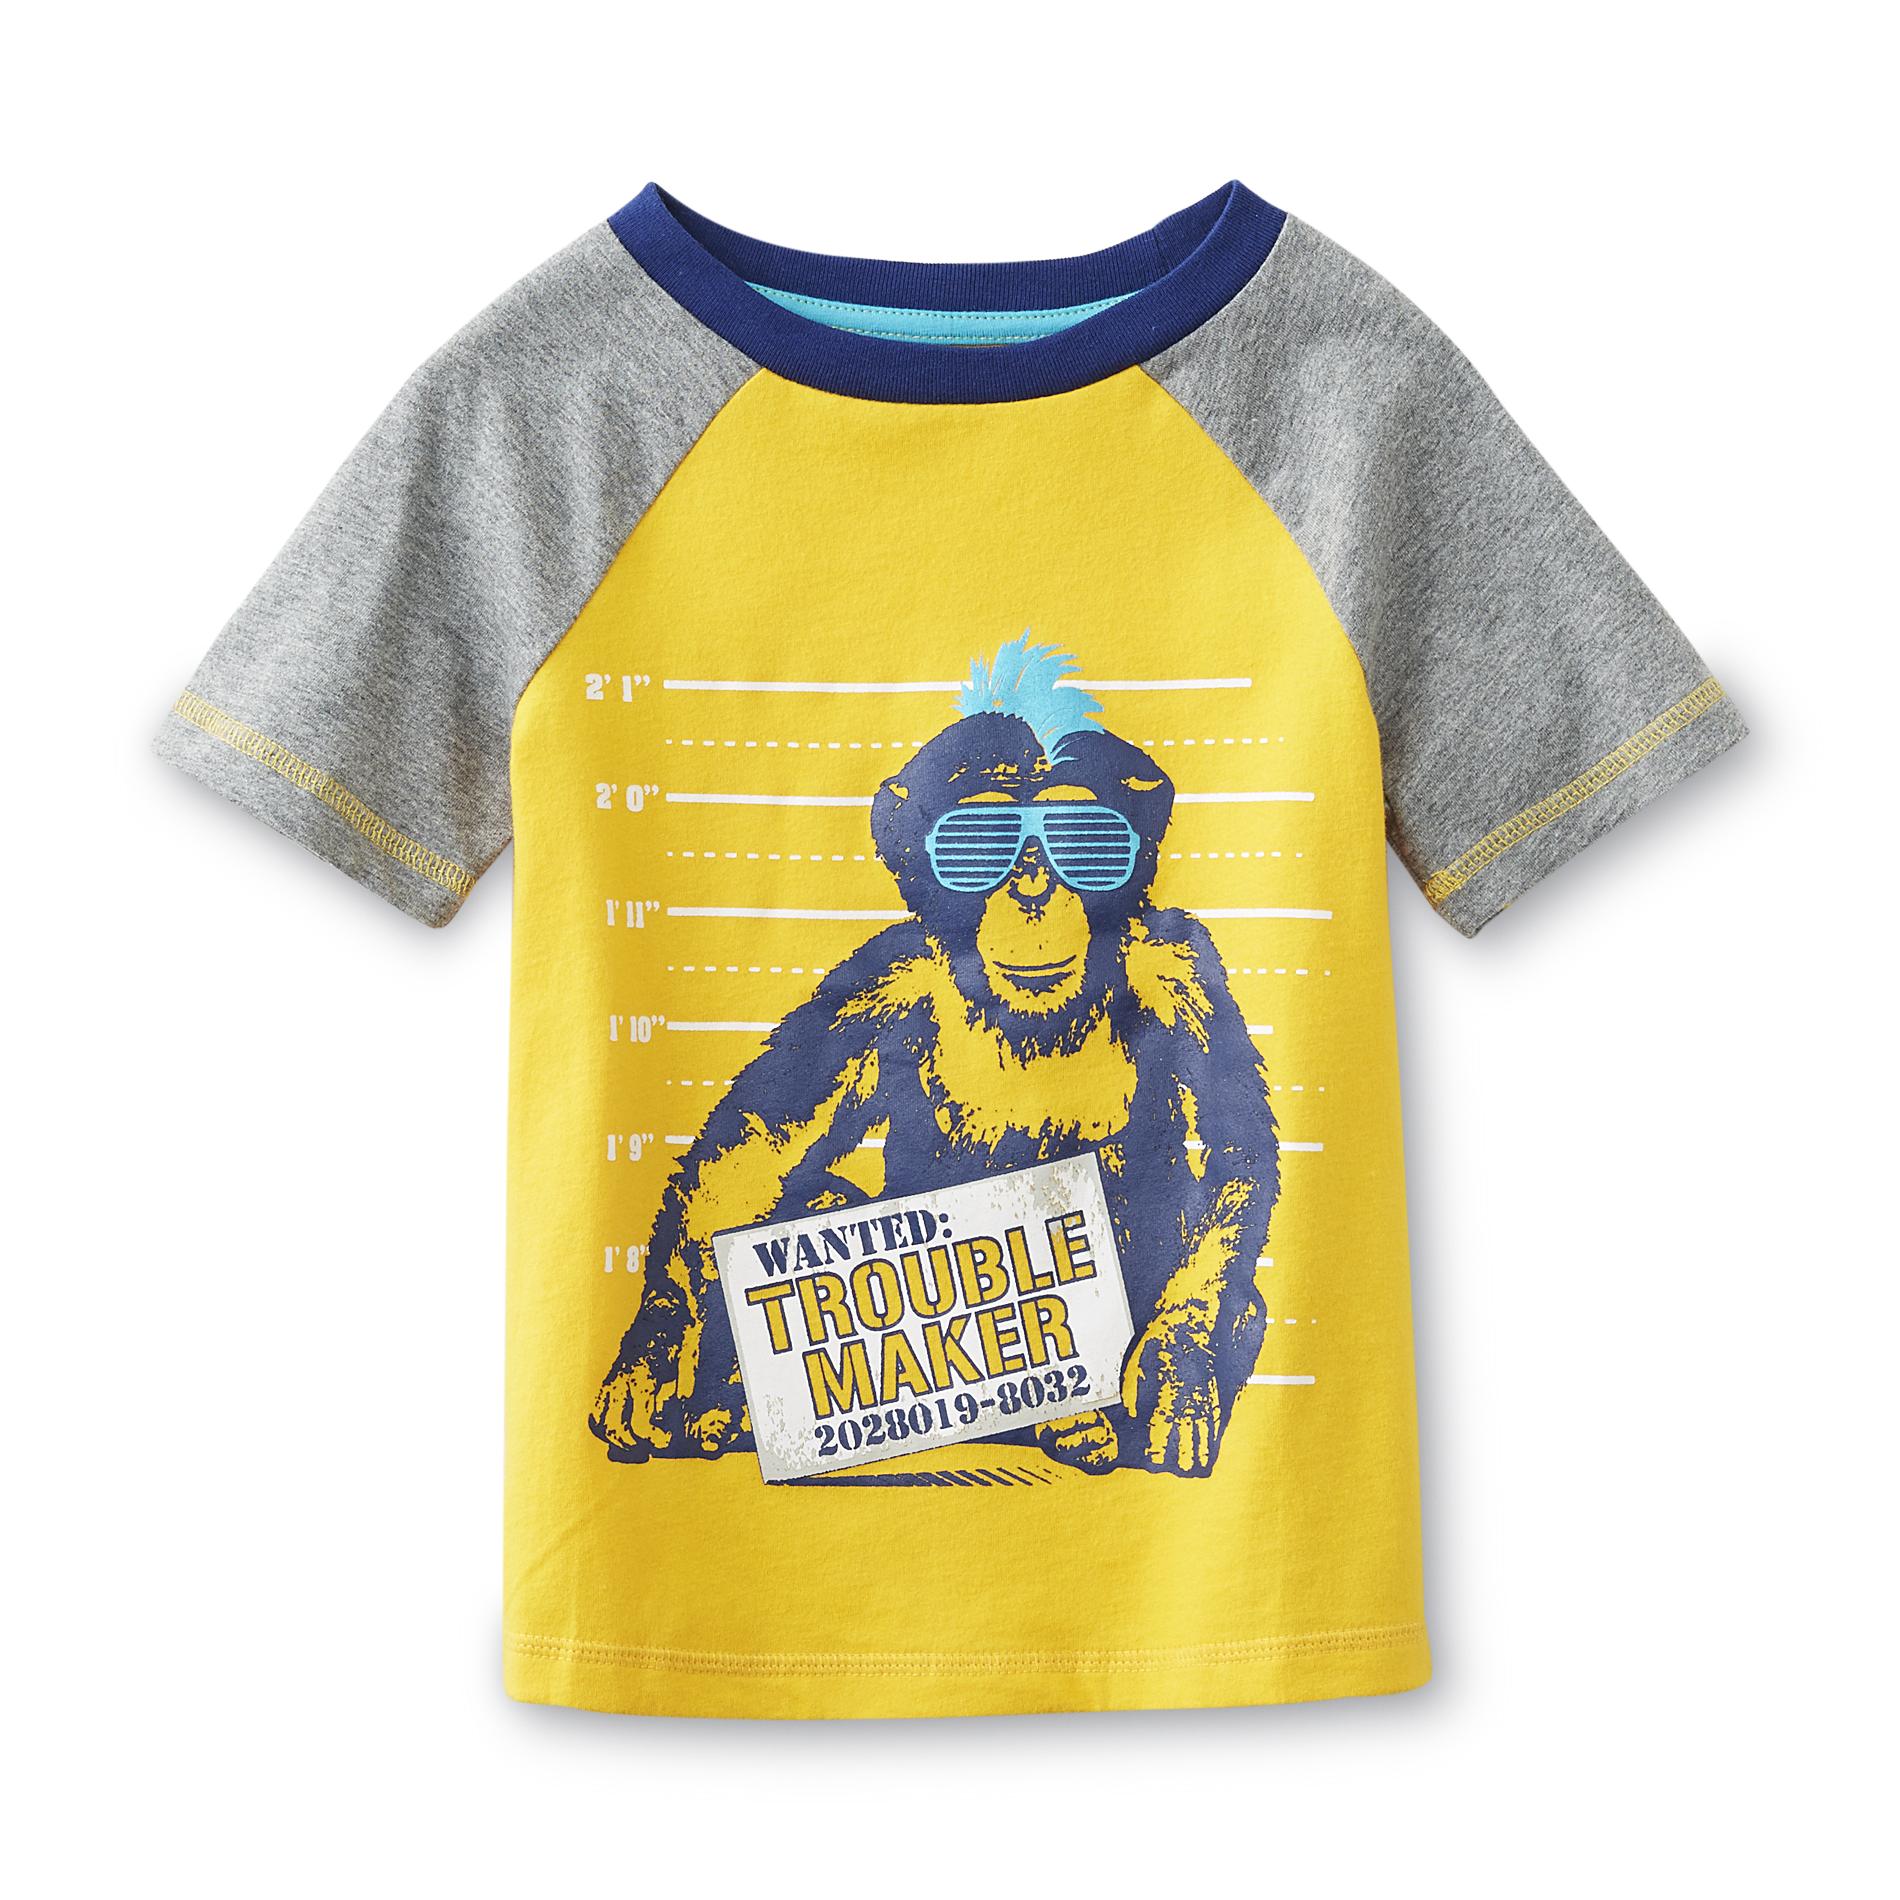 Toughskins Infant & Toddler Boy's Graphic T-Shirt - Monkey